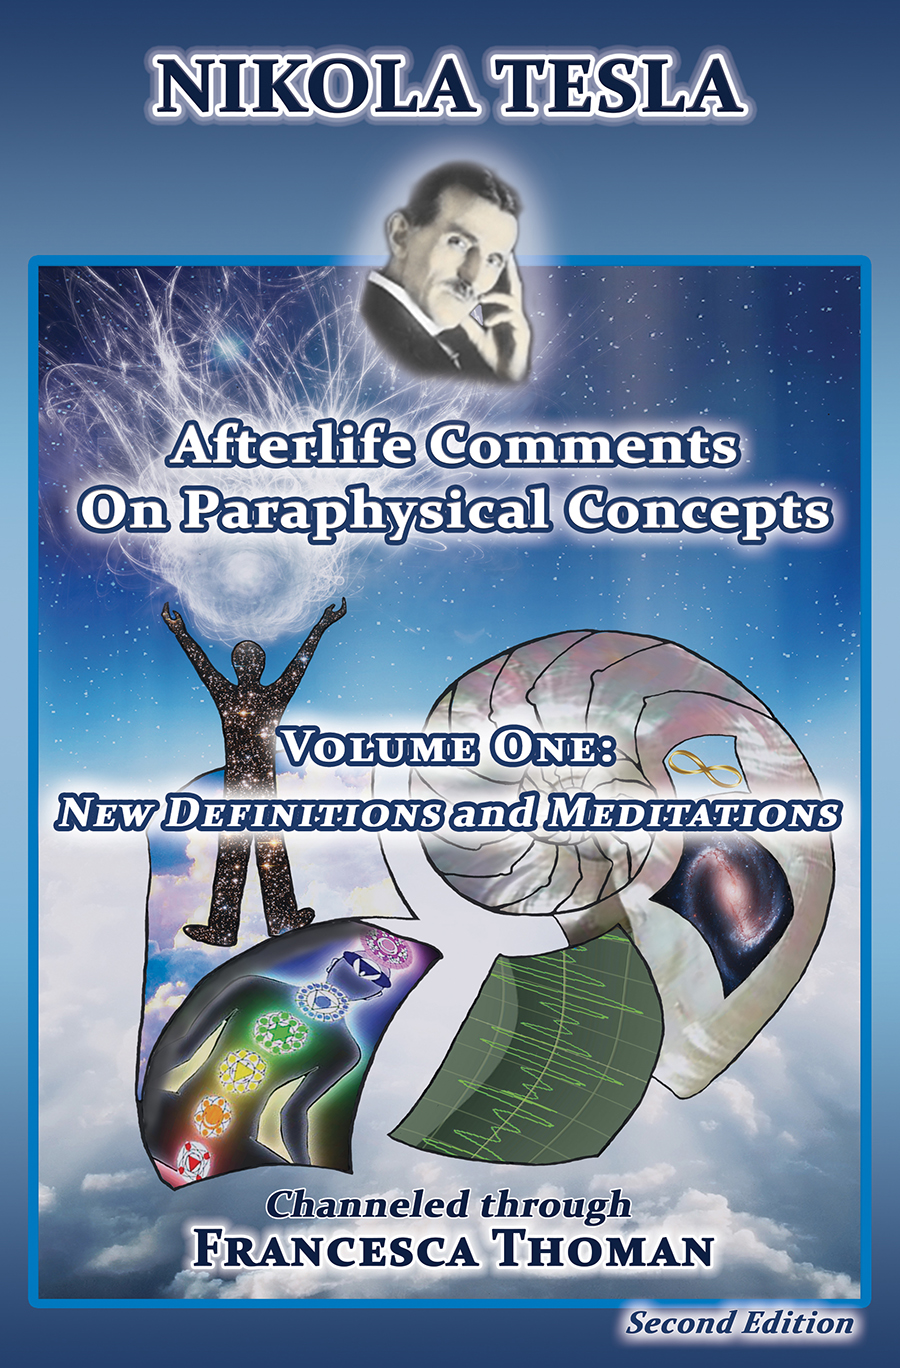 Nikola Tesla: Volume One ~ Afterlife Comments on Paraphysical Concepts